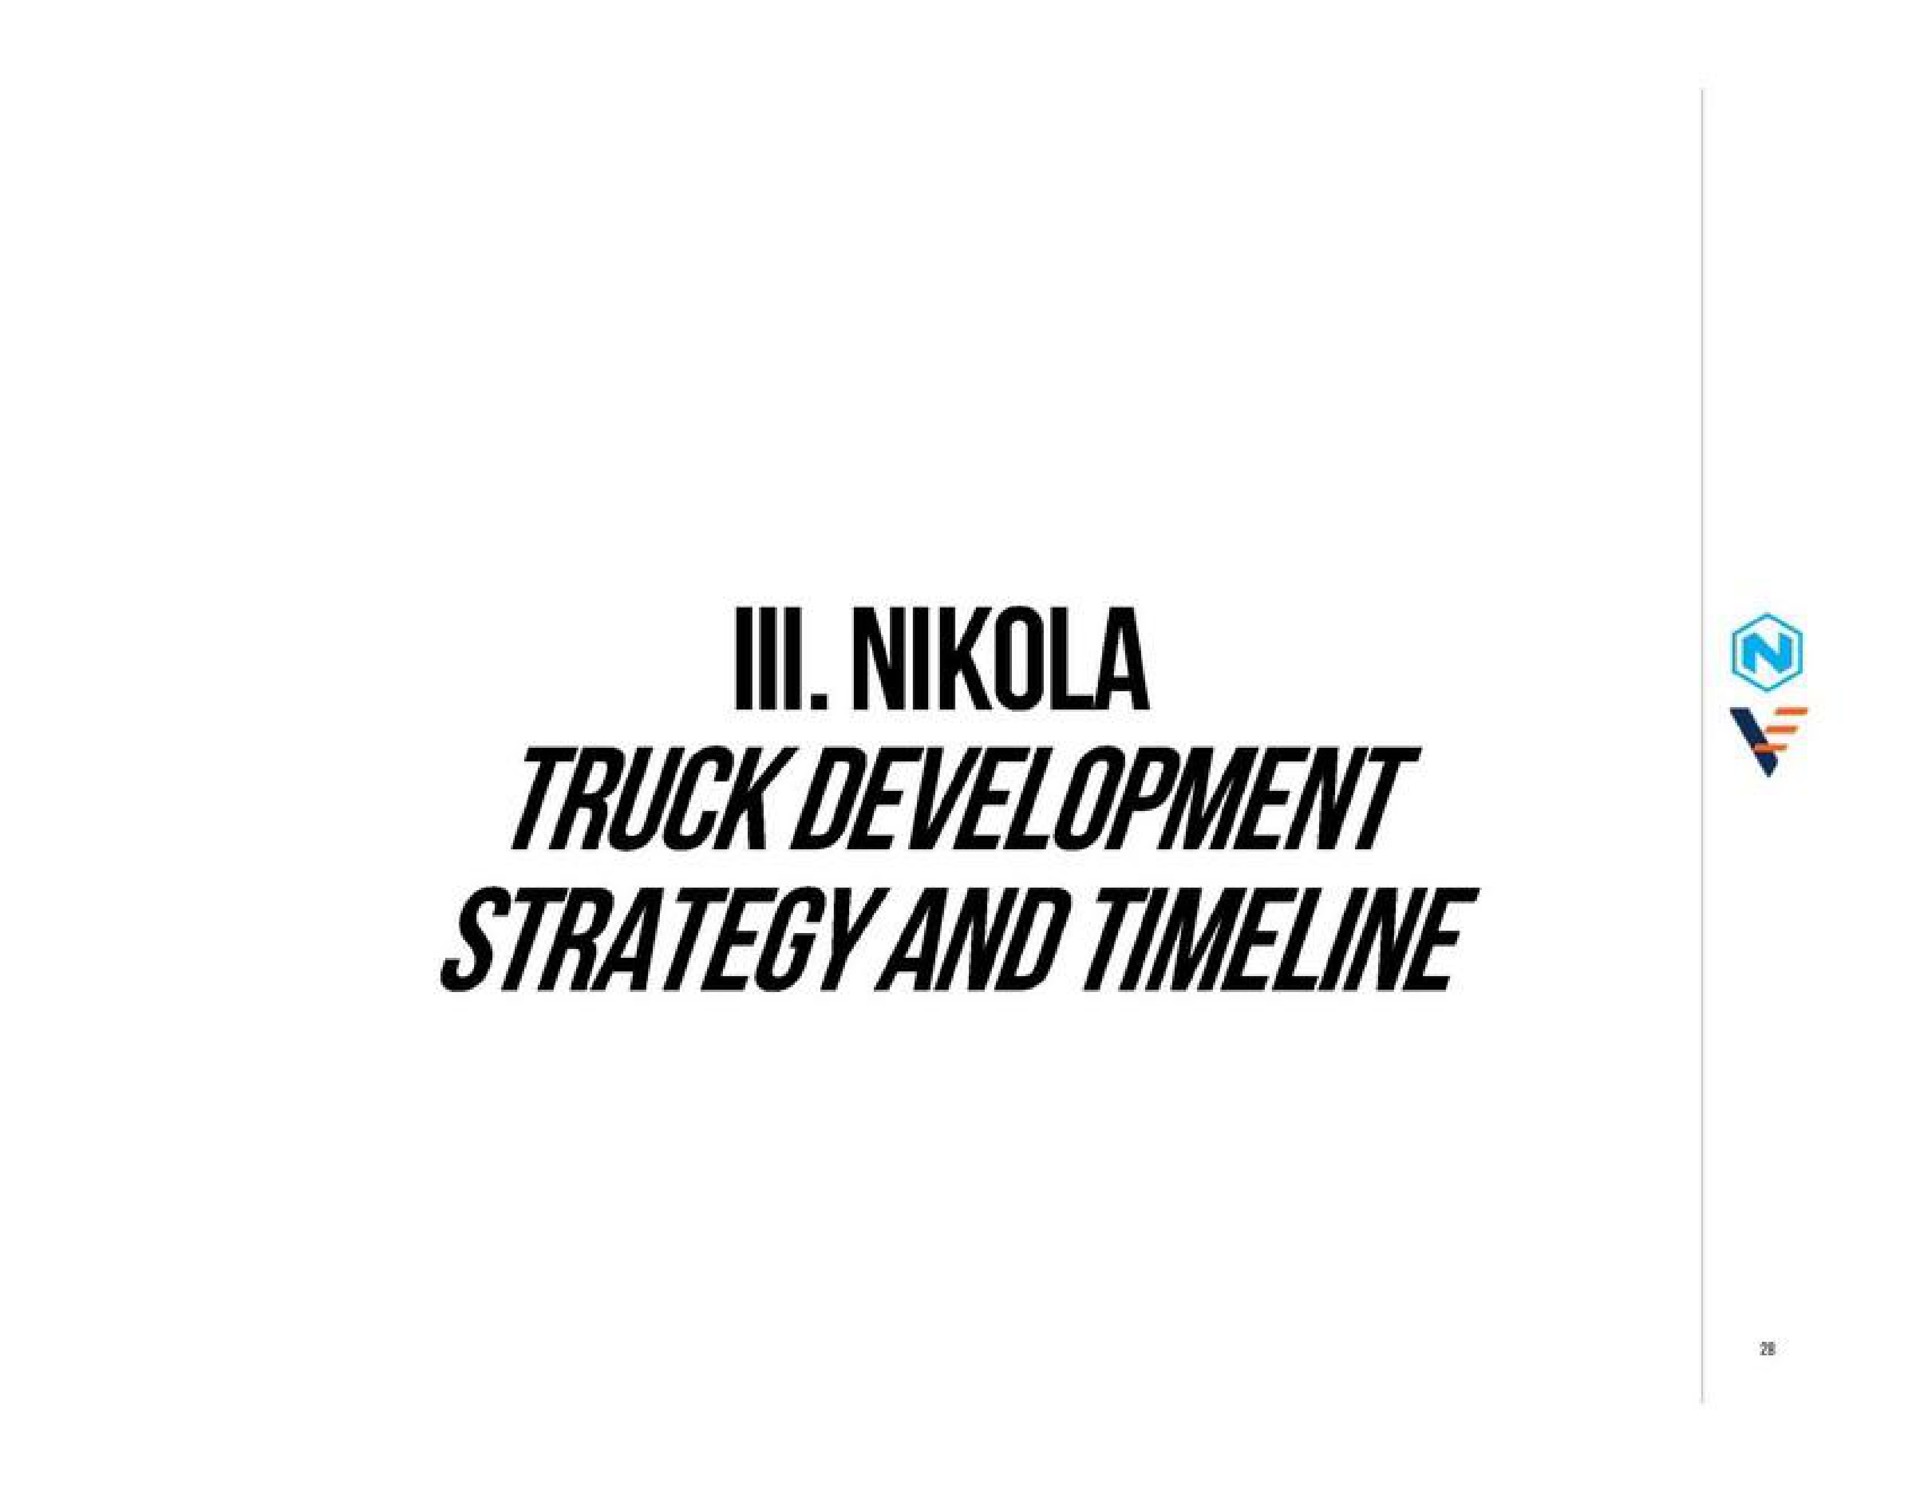 ill truck development strategy and | Nikola